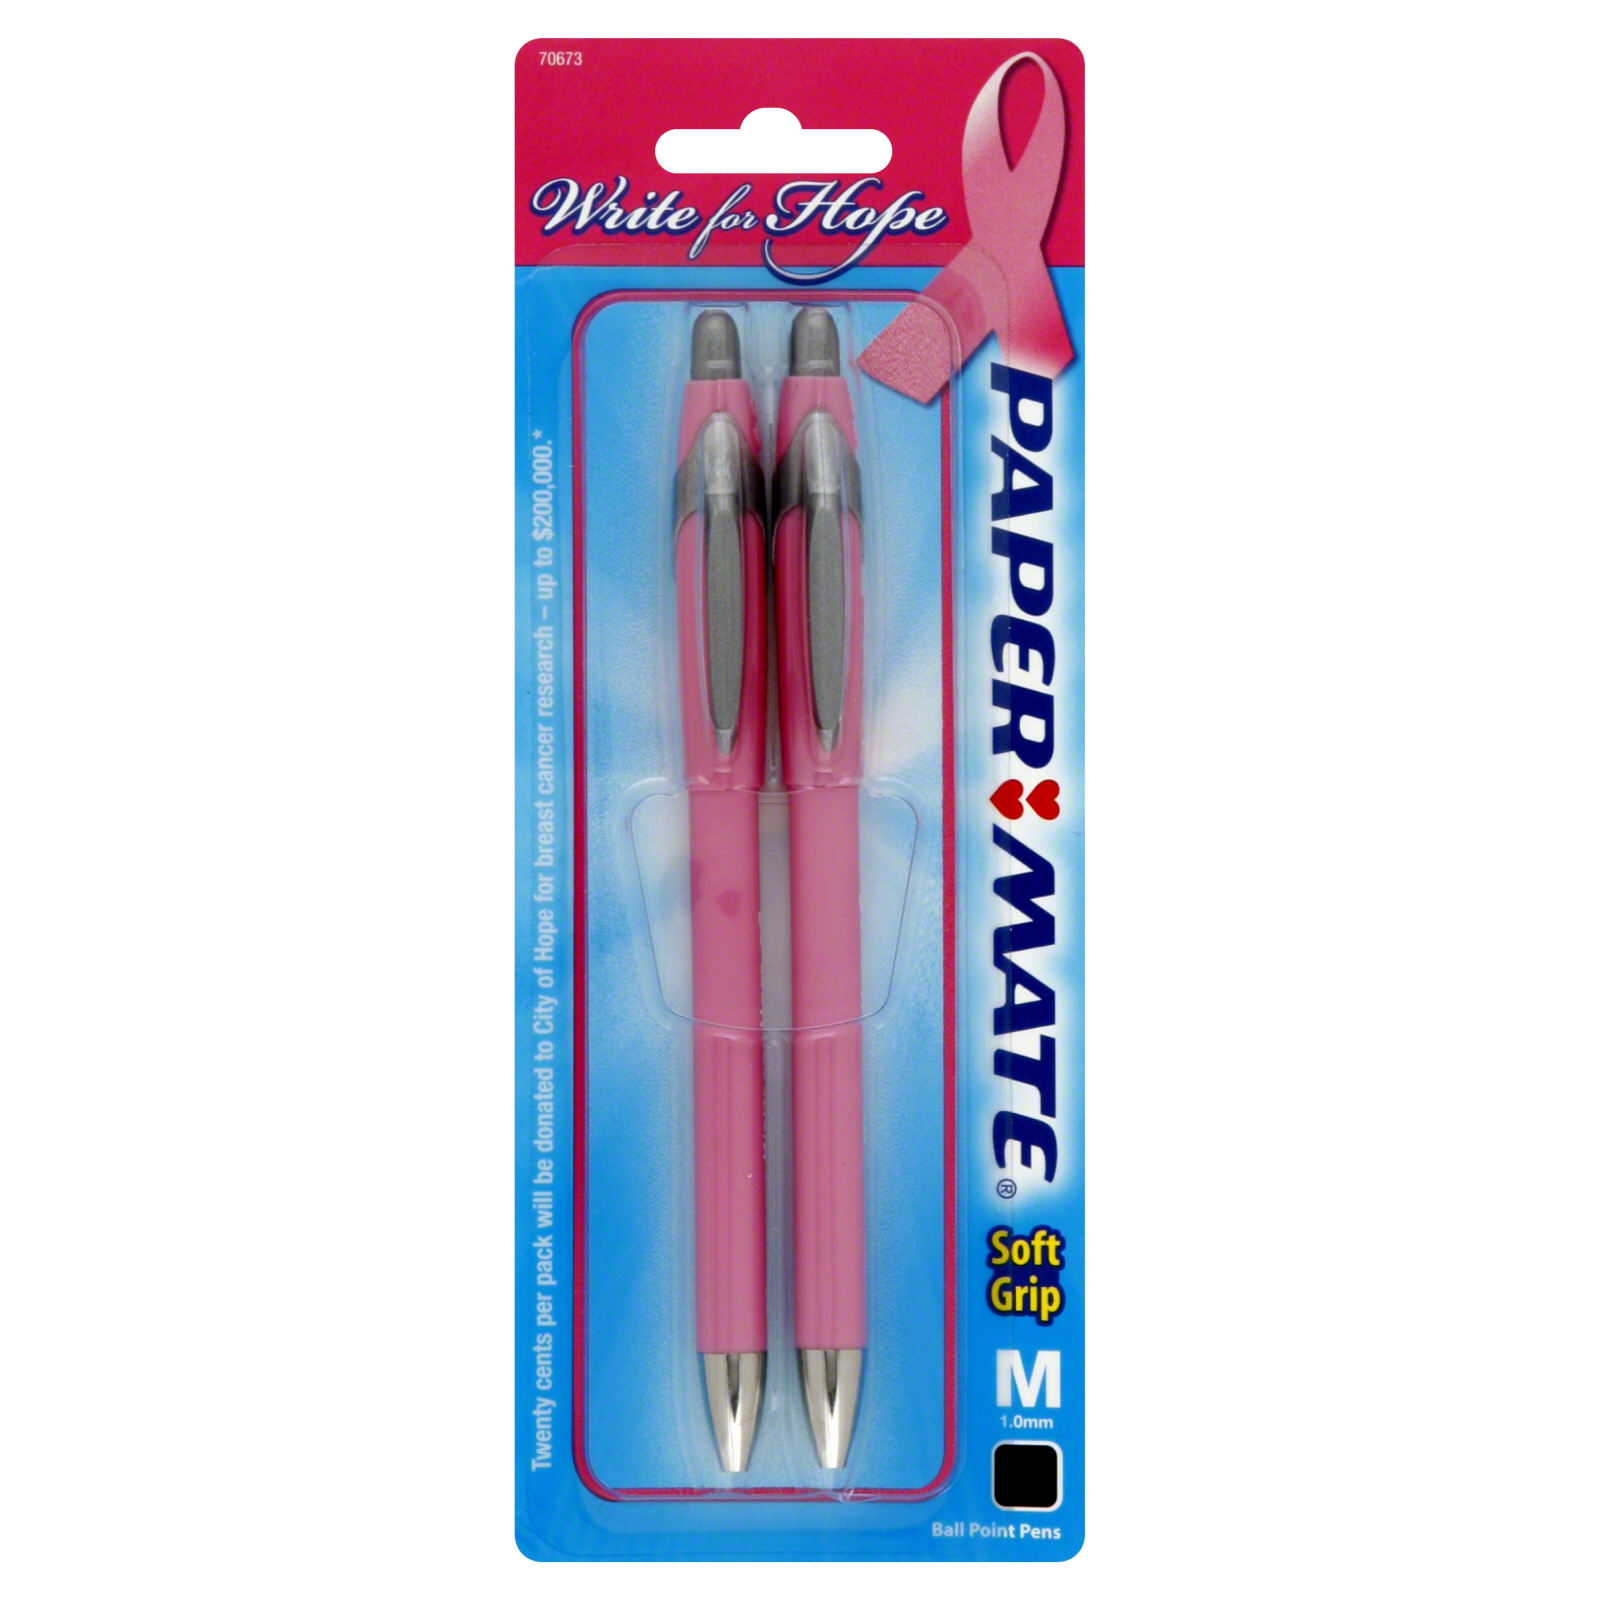 Post it Flag+ Highlighter & Pen, Black Pen Ink, Medium Ballpoint, Chisel Tip, 1 set   Office Supplies   School Supplies   Writing & Correction Supplies   Pens & Pen Refills